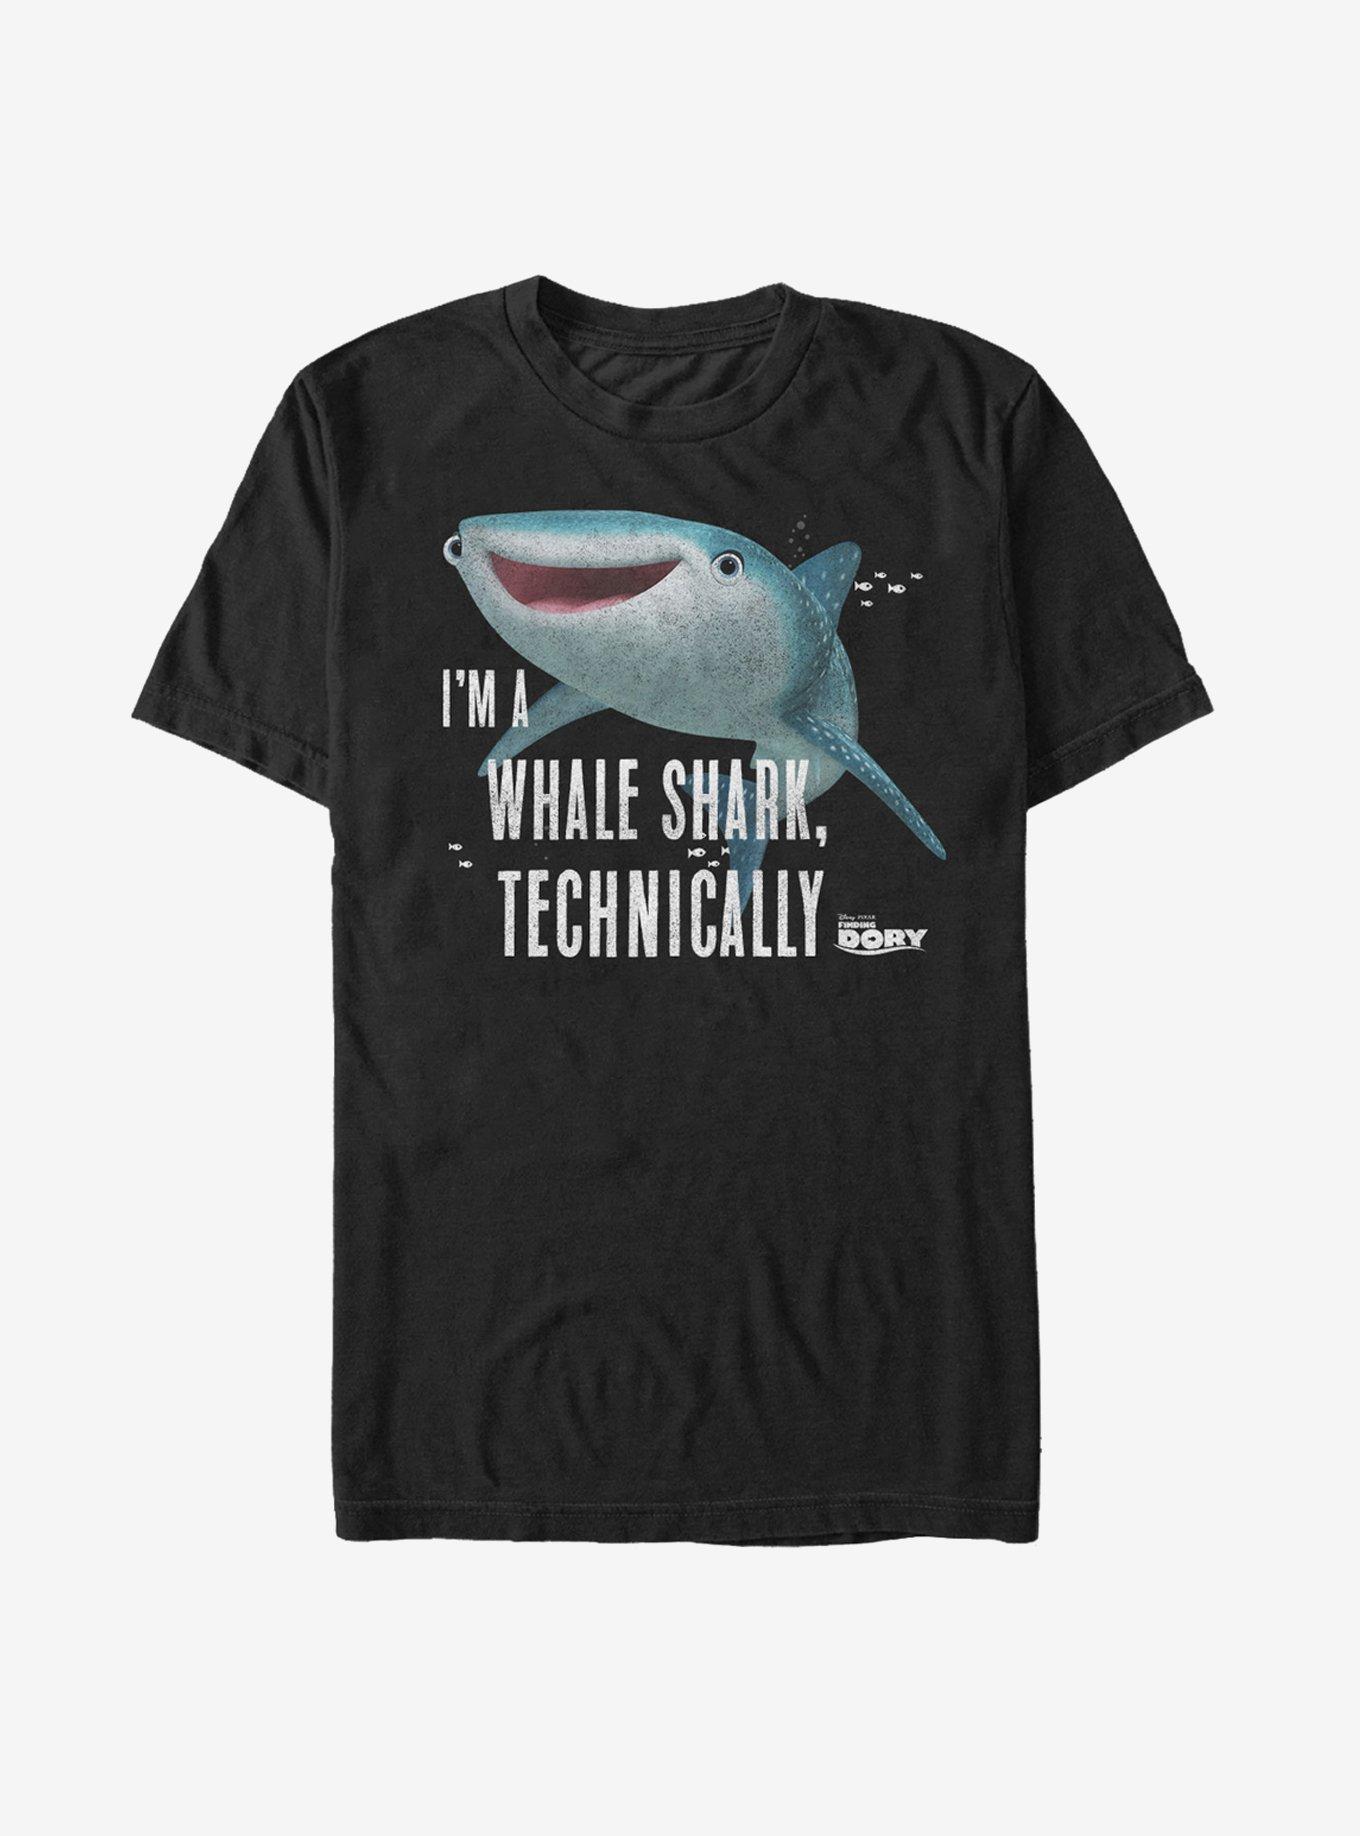 Disney Pixar Finding Dory Destiny Whale Shark T-Shirt